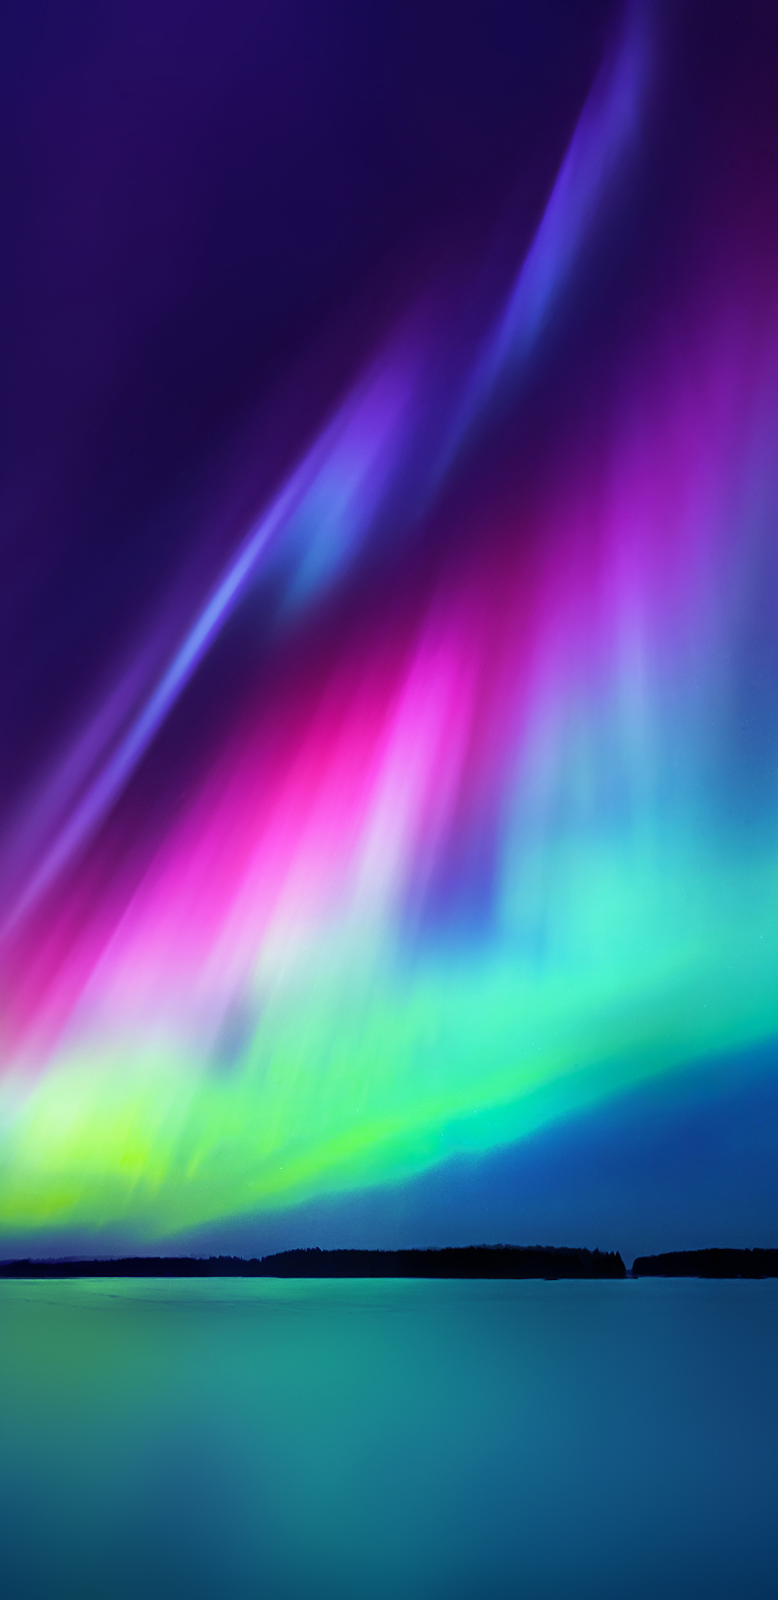 Colorful Aurora Borealis Wallpaper iPhone Android